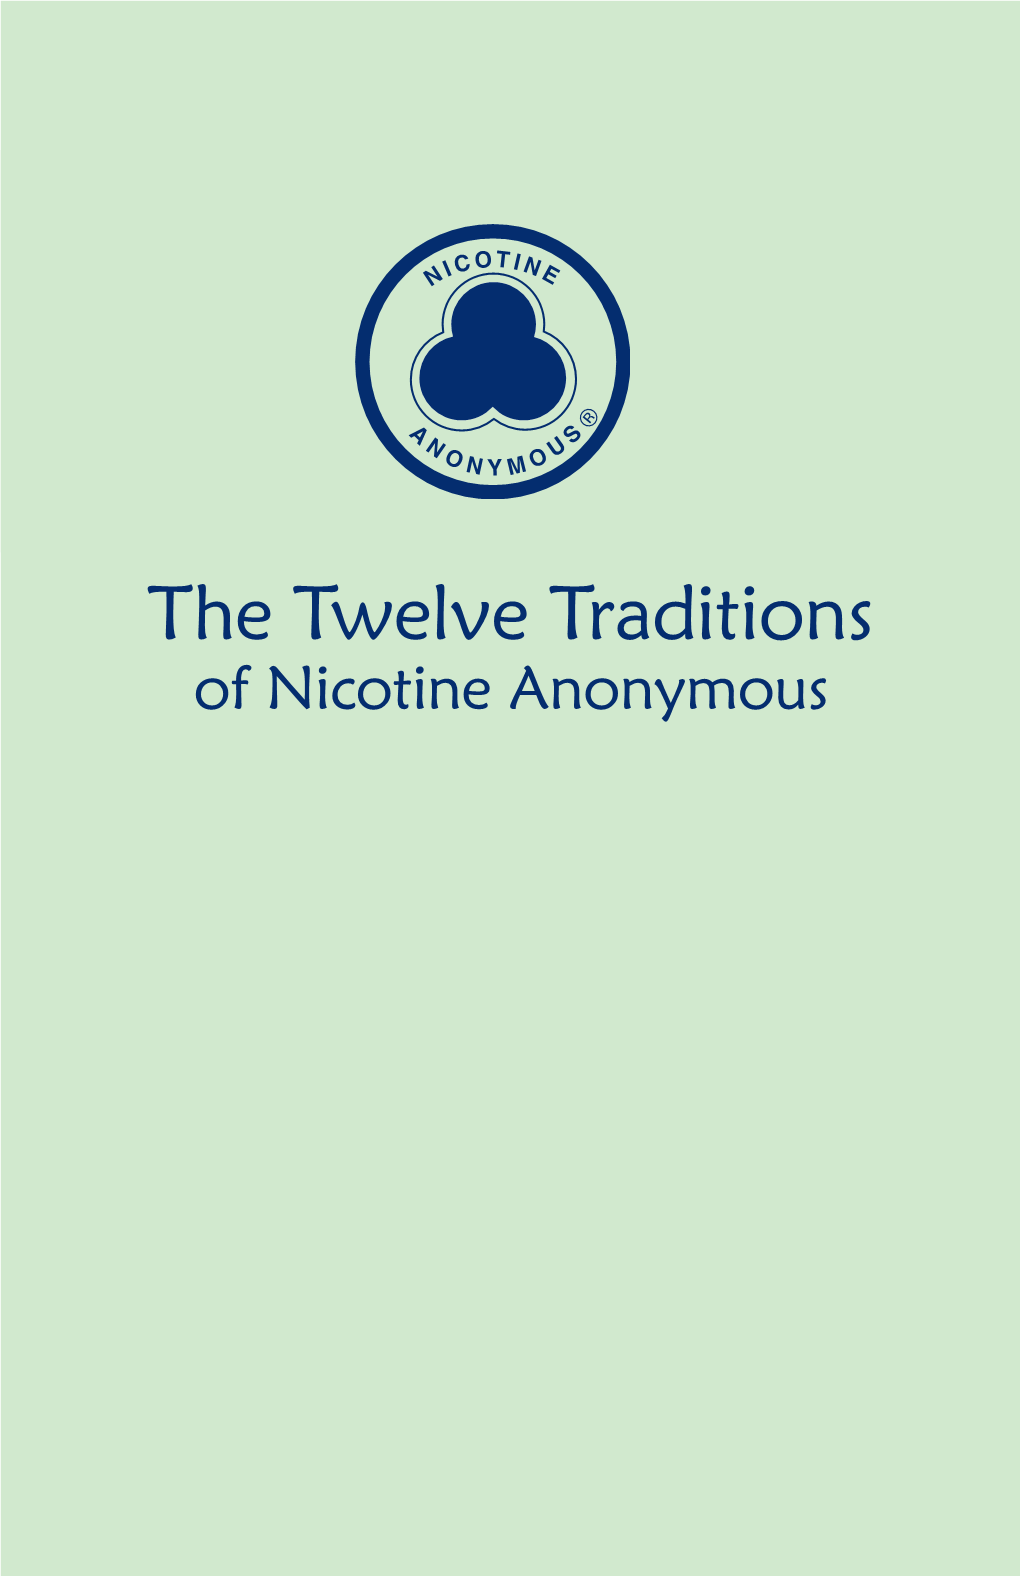 The Twelve Traditions of Nicotine Anonymous the Twelve Traditions* of Nicotine Anonymous